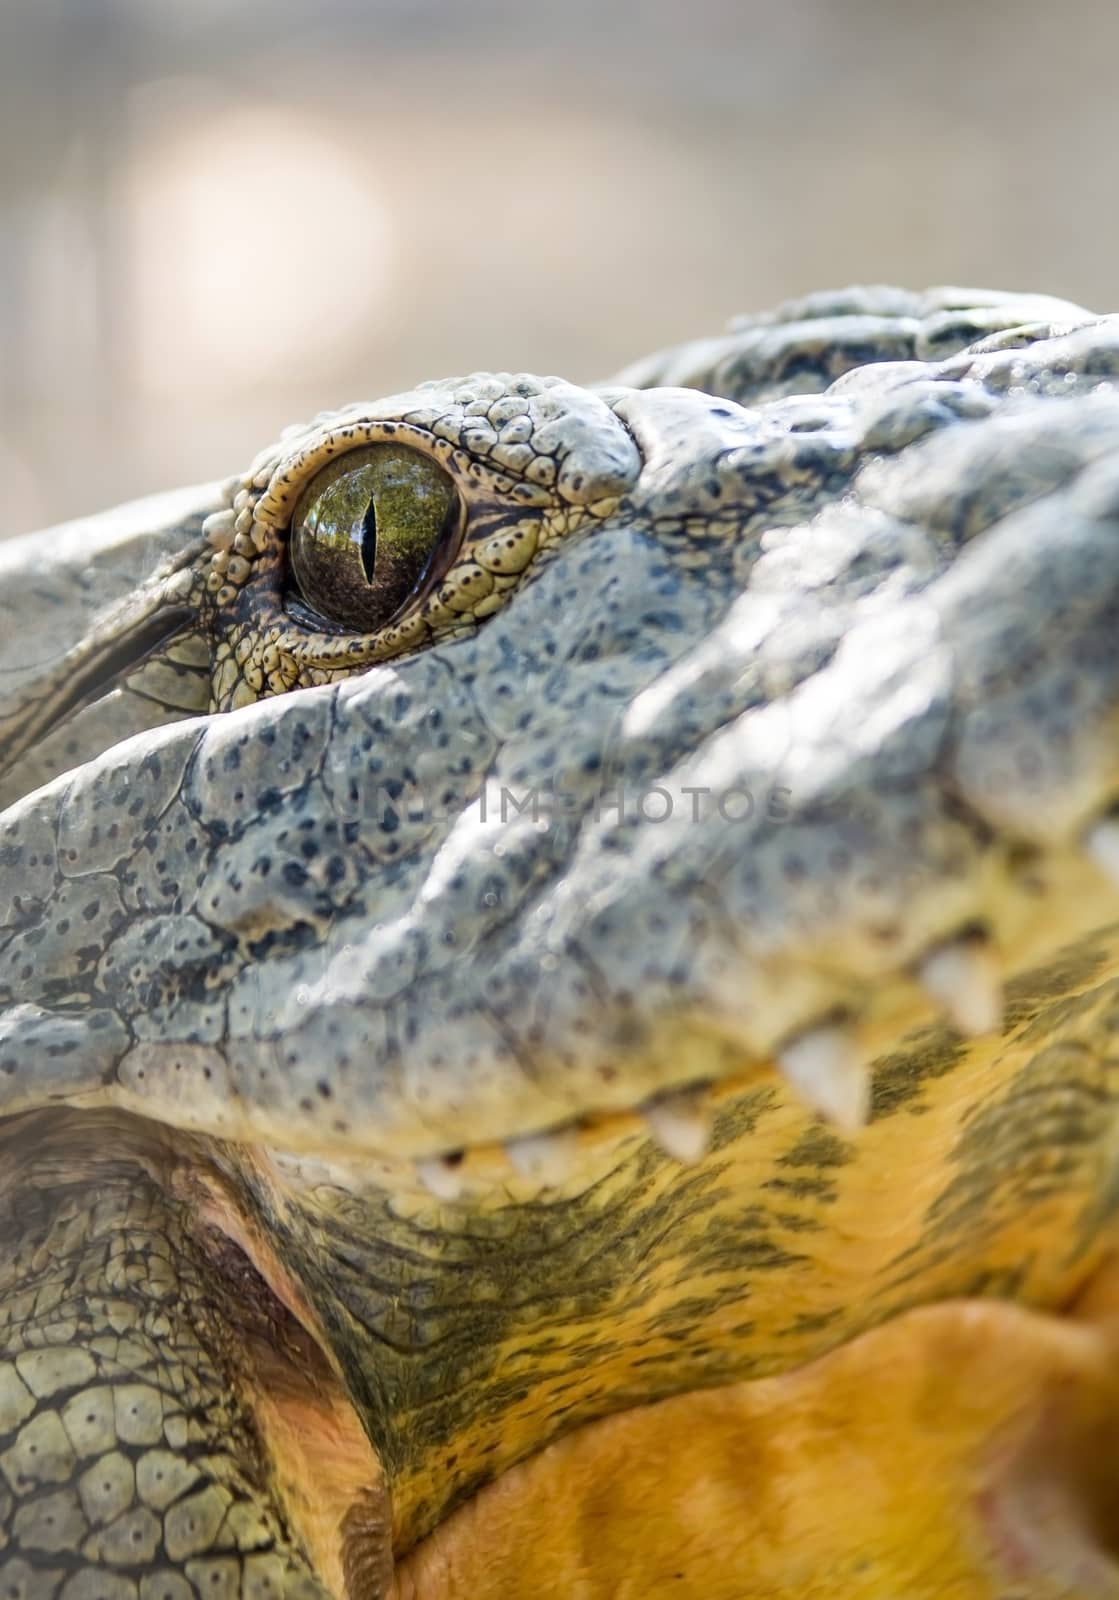  crocodile close-up eyes and teeth by MegaArt